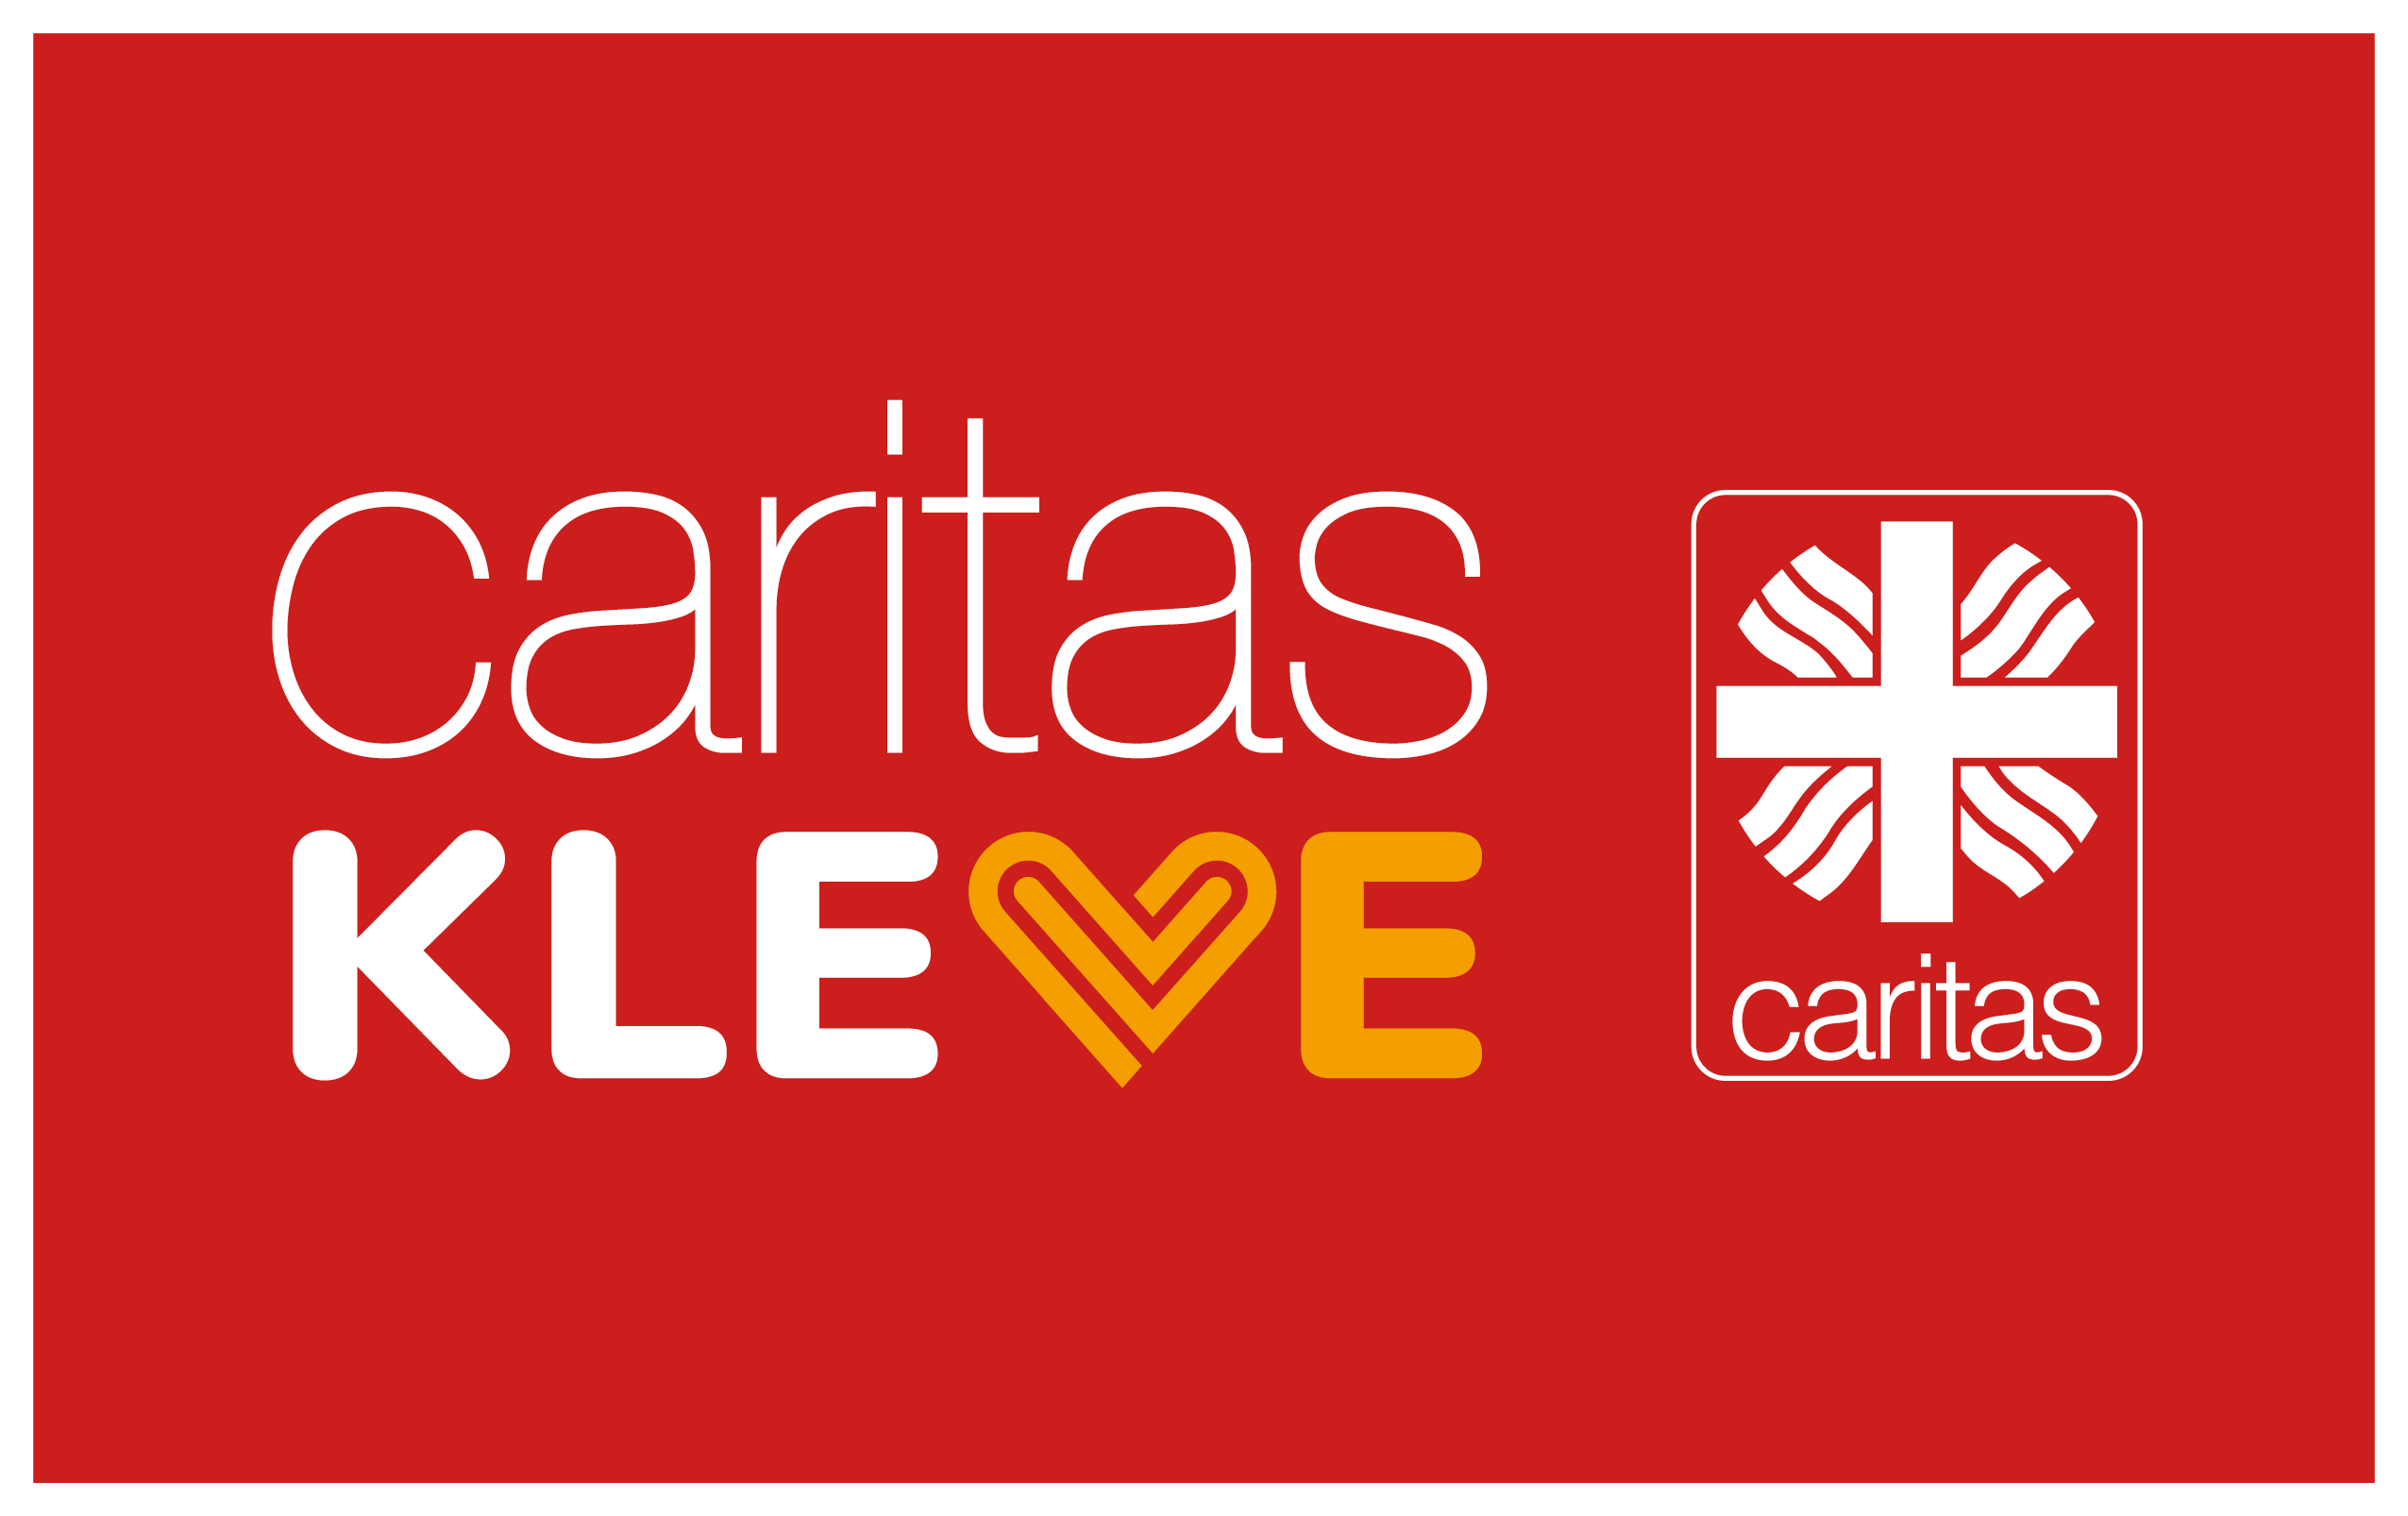 reintjes-digital-projekte-caritas-kleve-logo